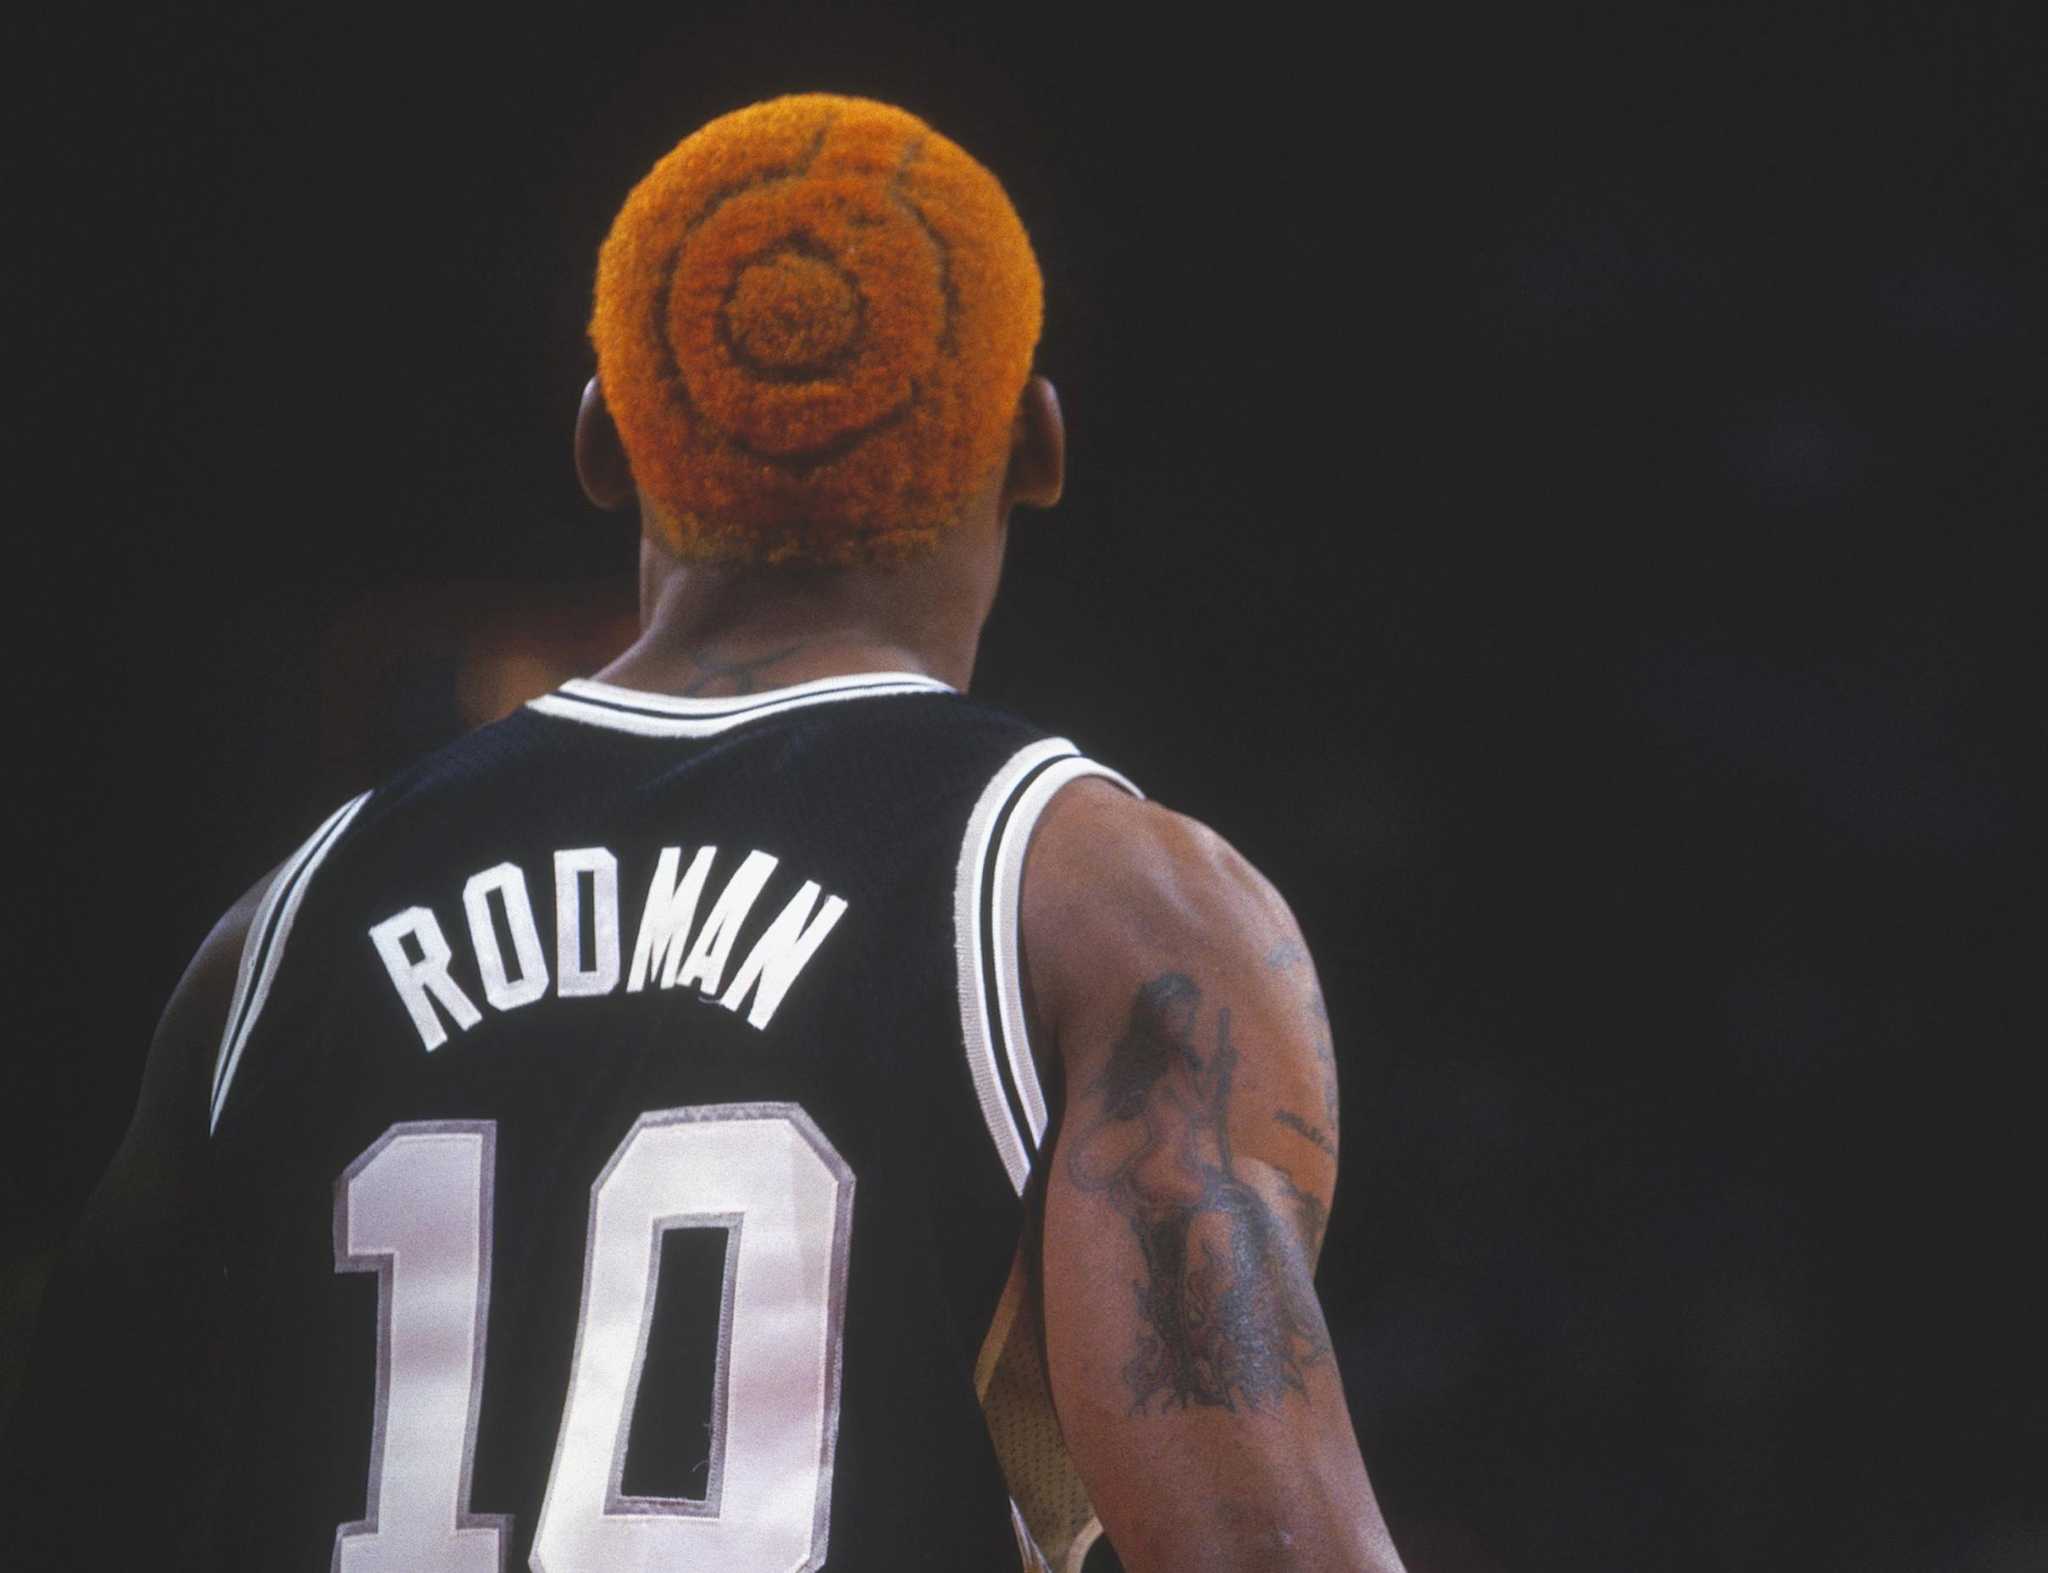 Dennis Rodman comparison only goes so far with Spurs' Jeremy Sochan